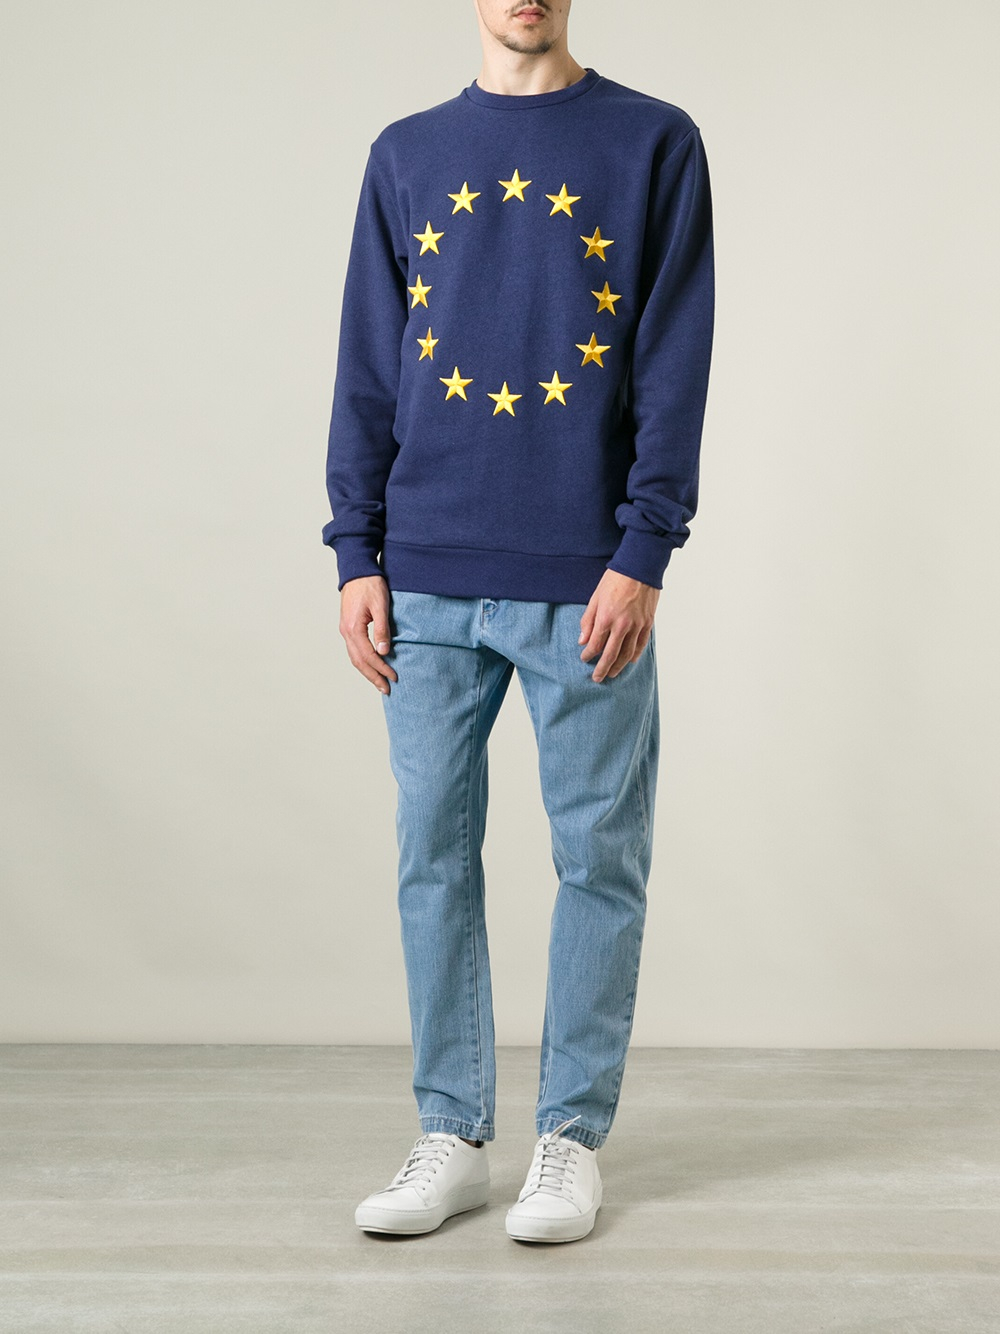 Etudes Studio Europe Sweatshirt in Blue for Men - Lyst